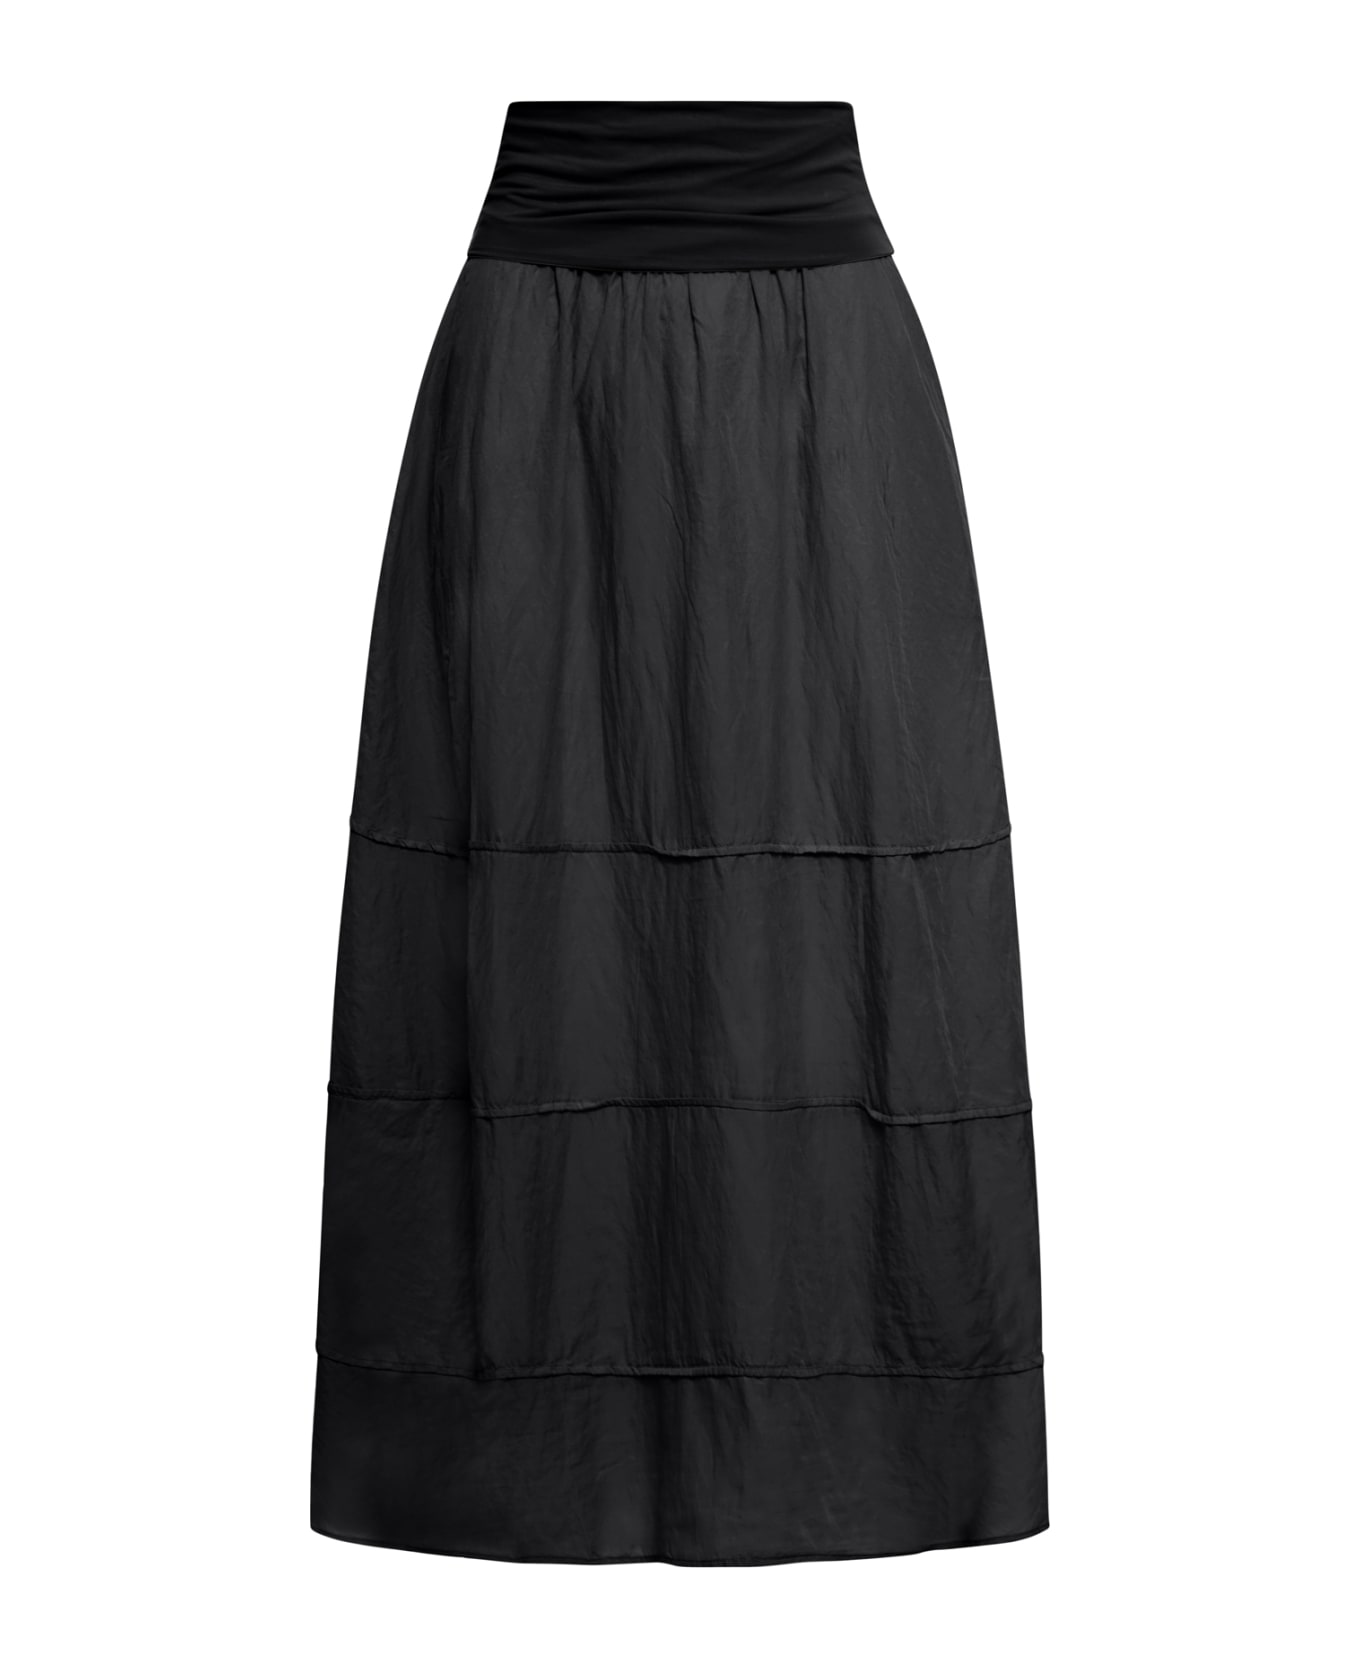 Transit Skirt - Black